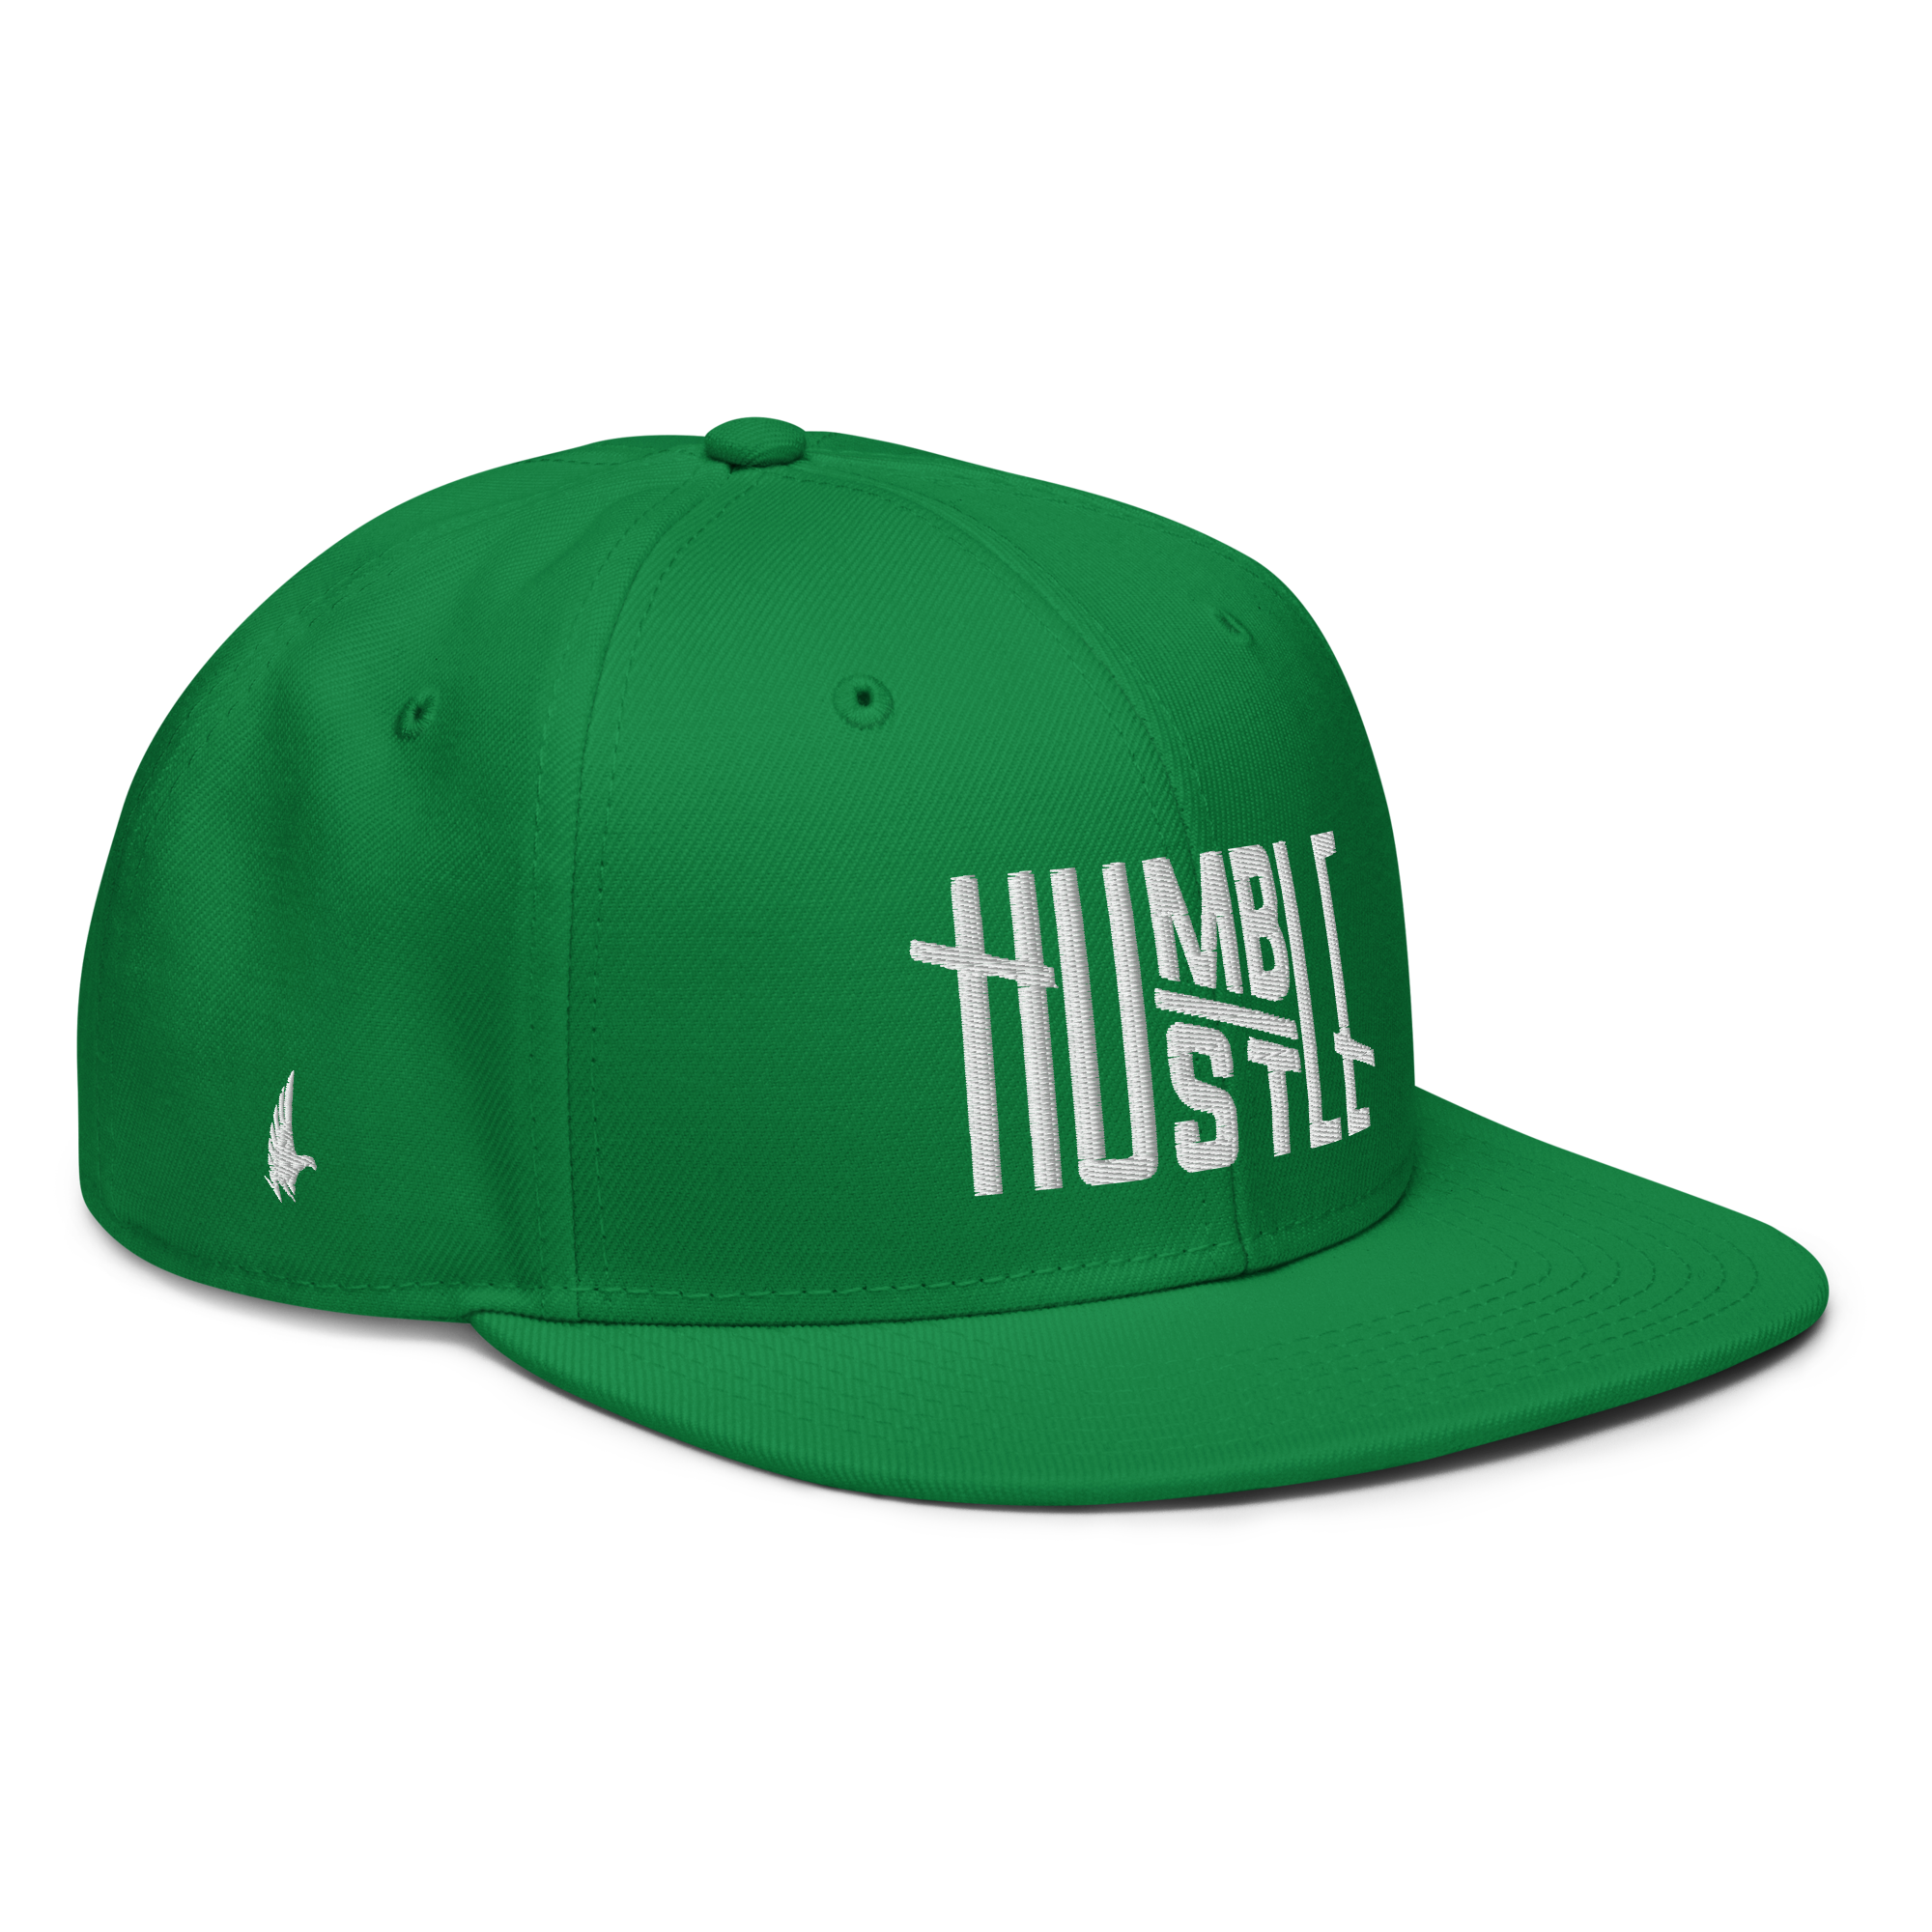 Humble Hustle Snapback Hat - Green/White OS - Loyalty Vibes